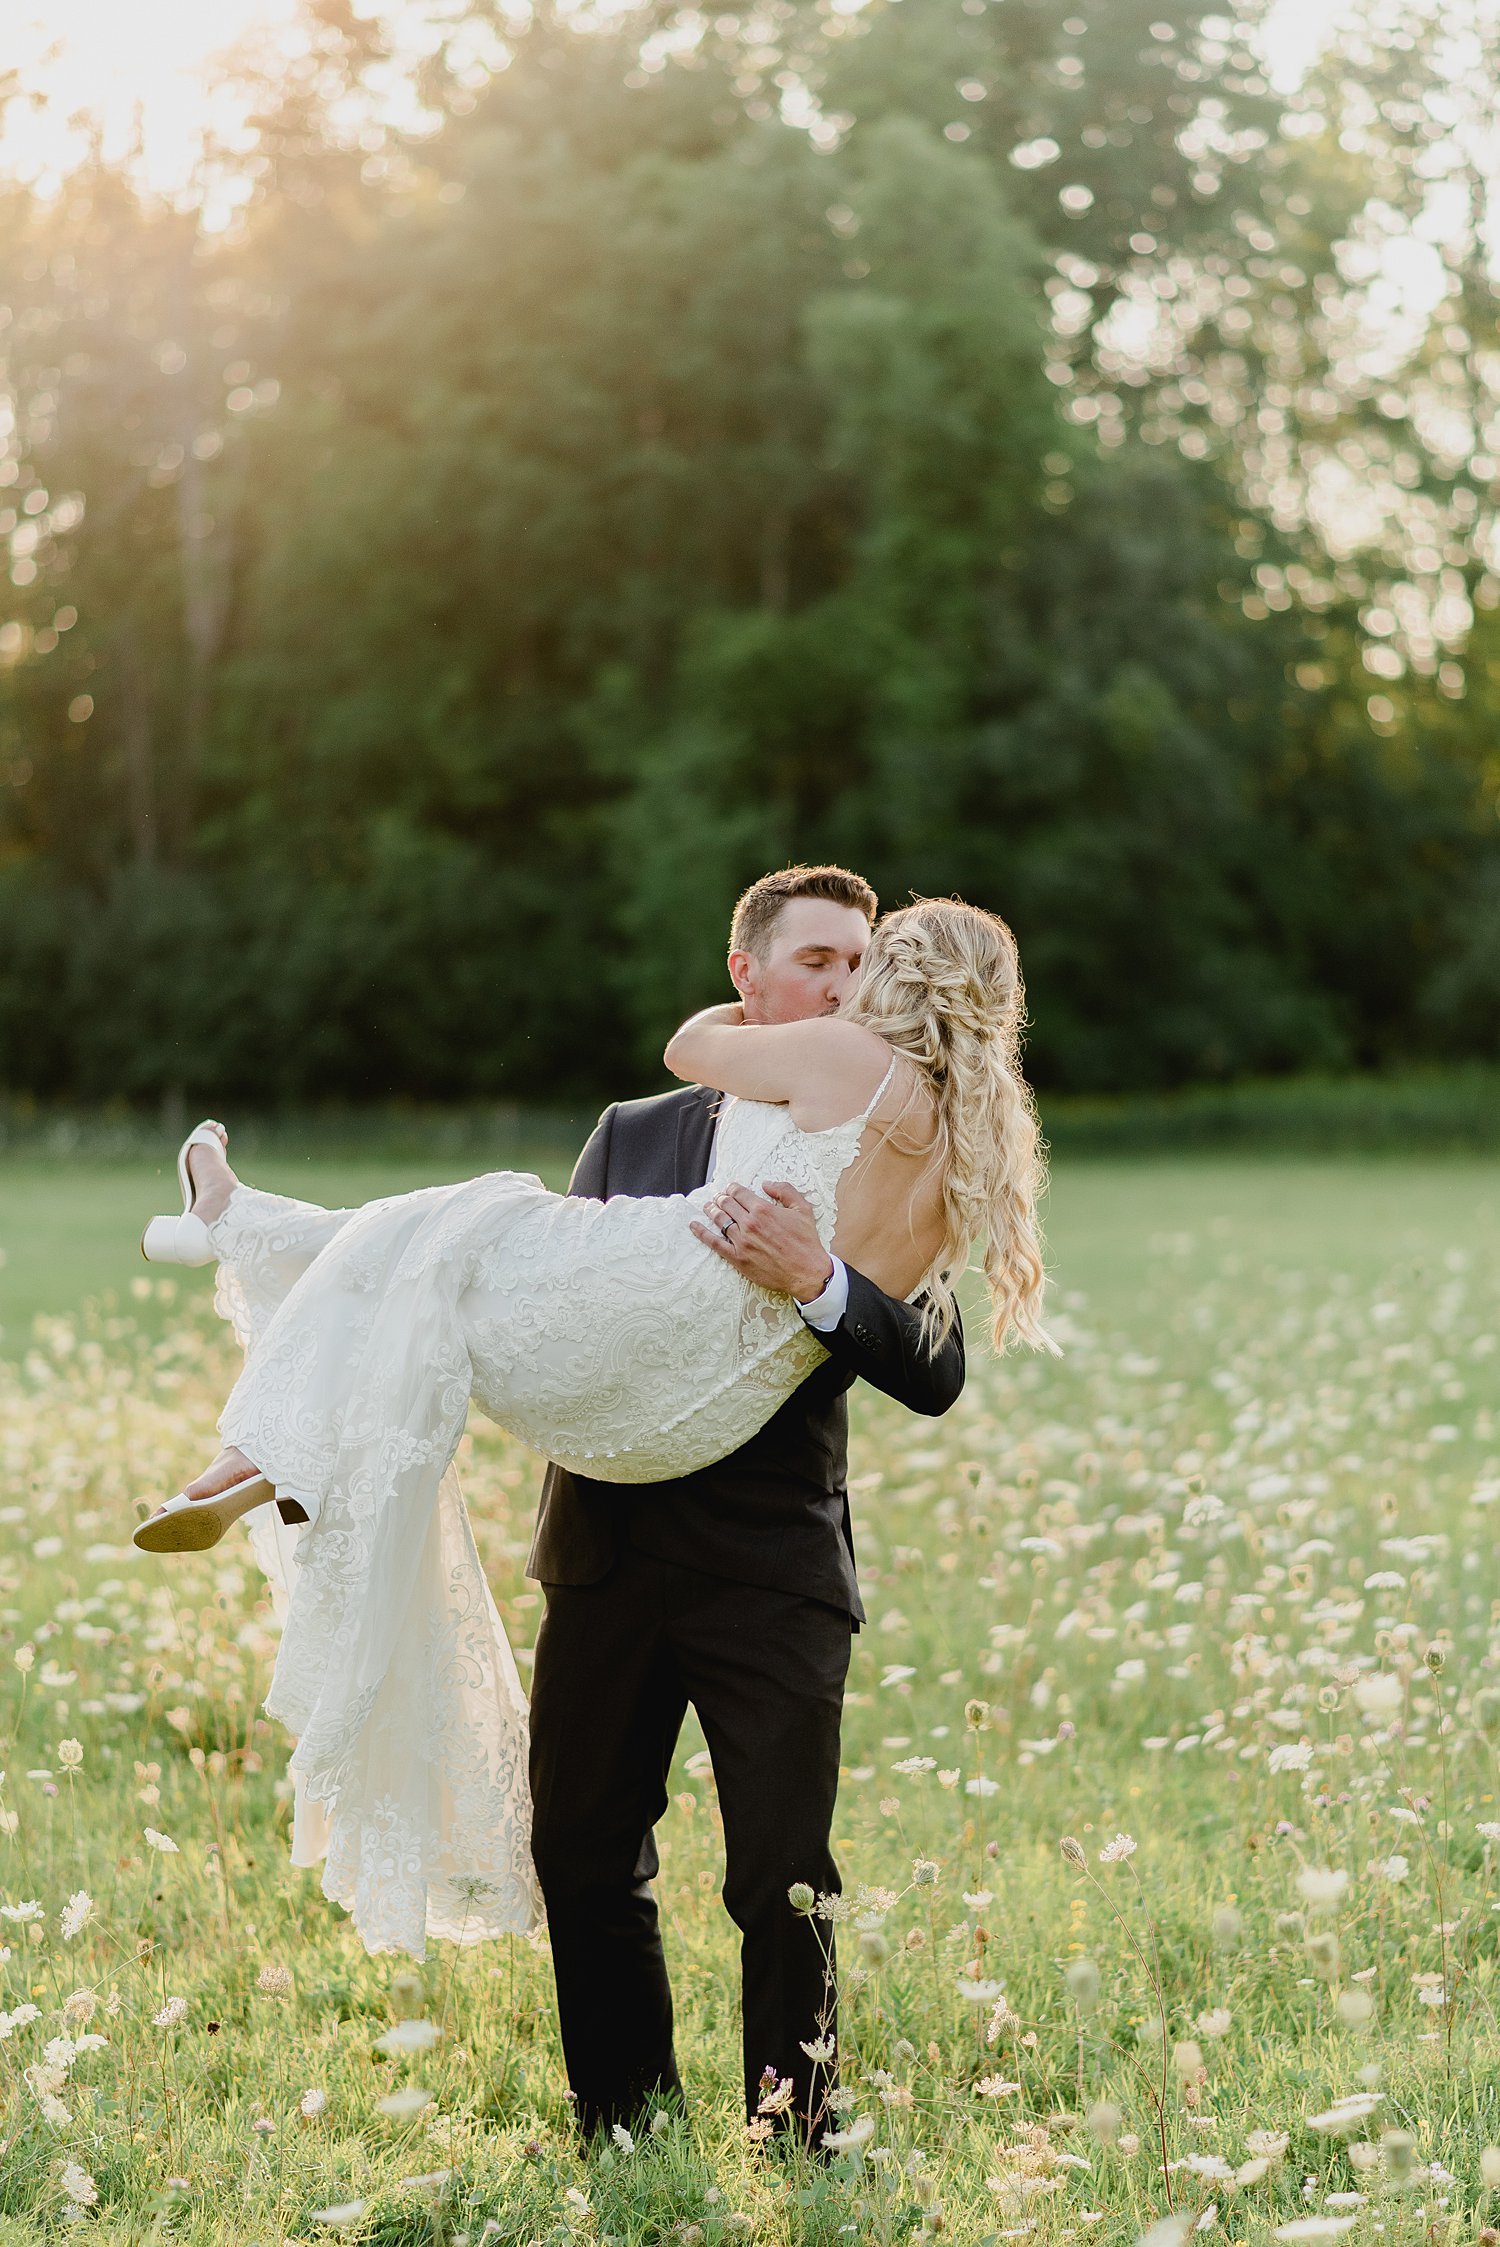 A Summer Wedding in Prince Edward County | Prince Edward County Wedding Photographer | Holly McMurter Photographs_0105.jpg